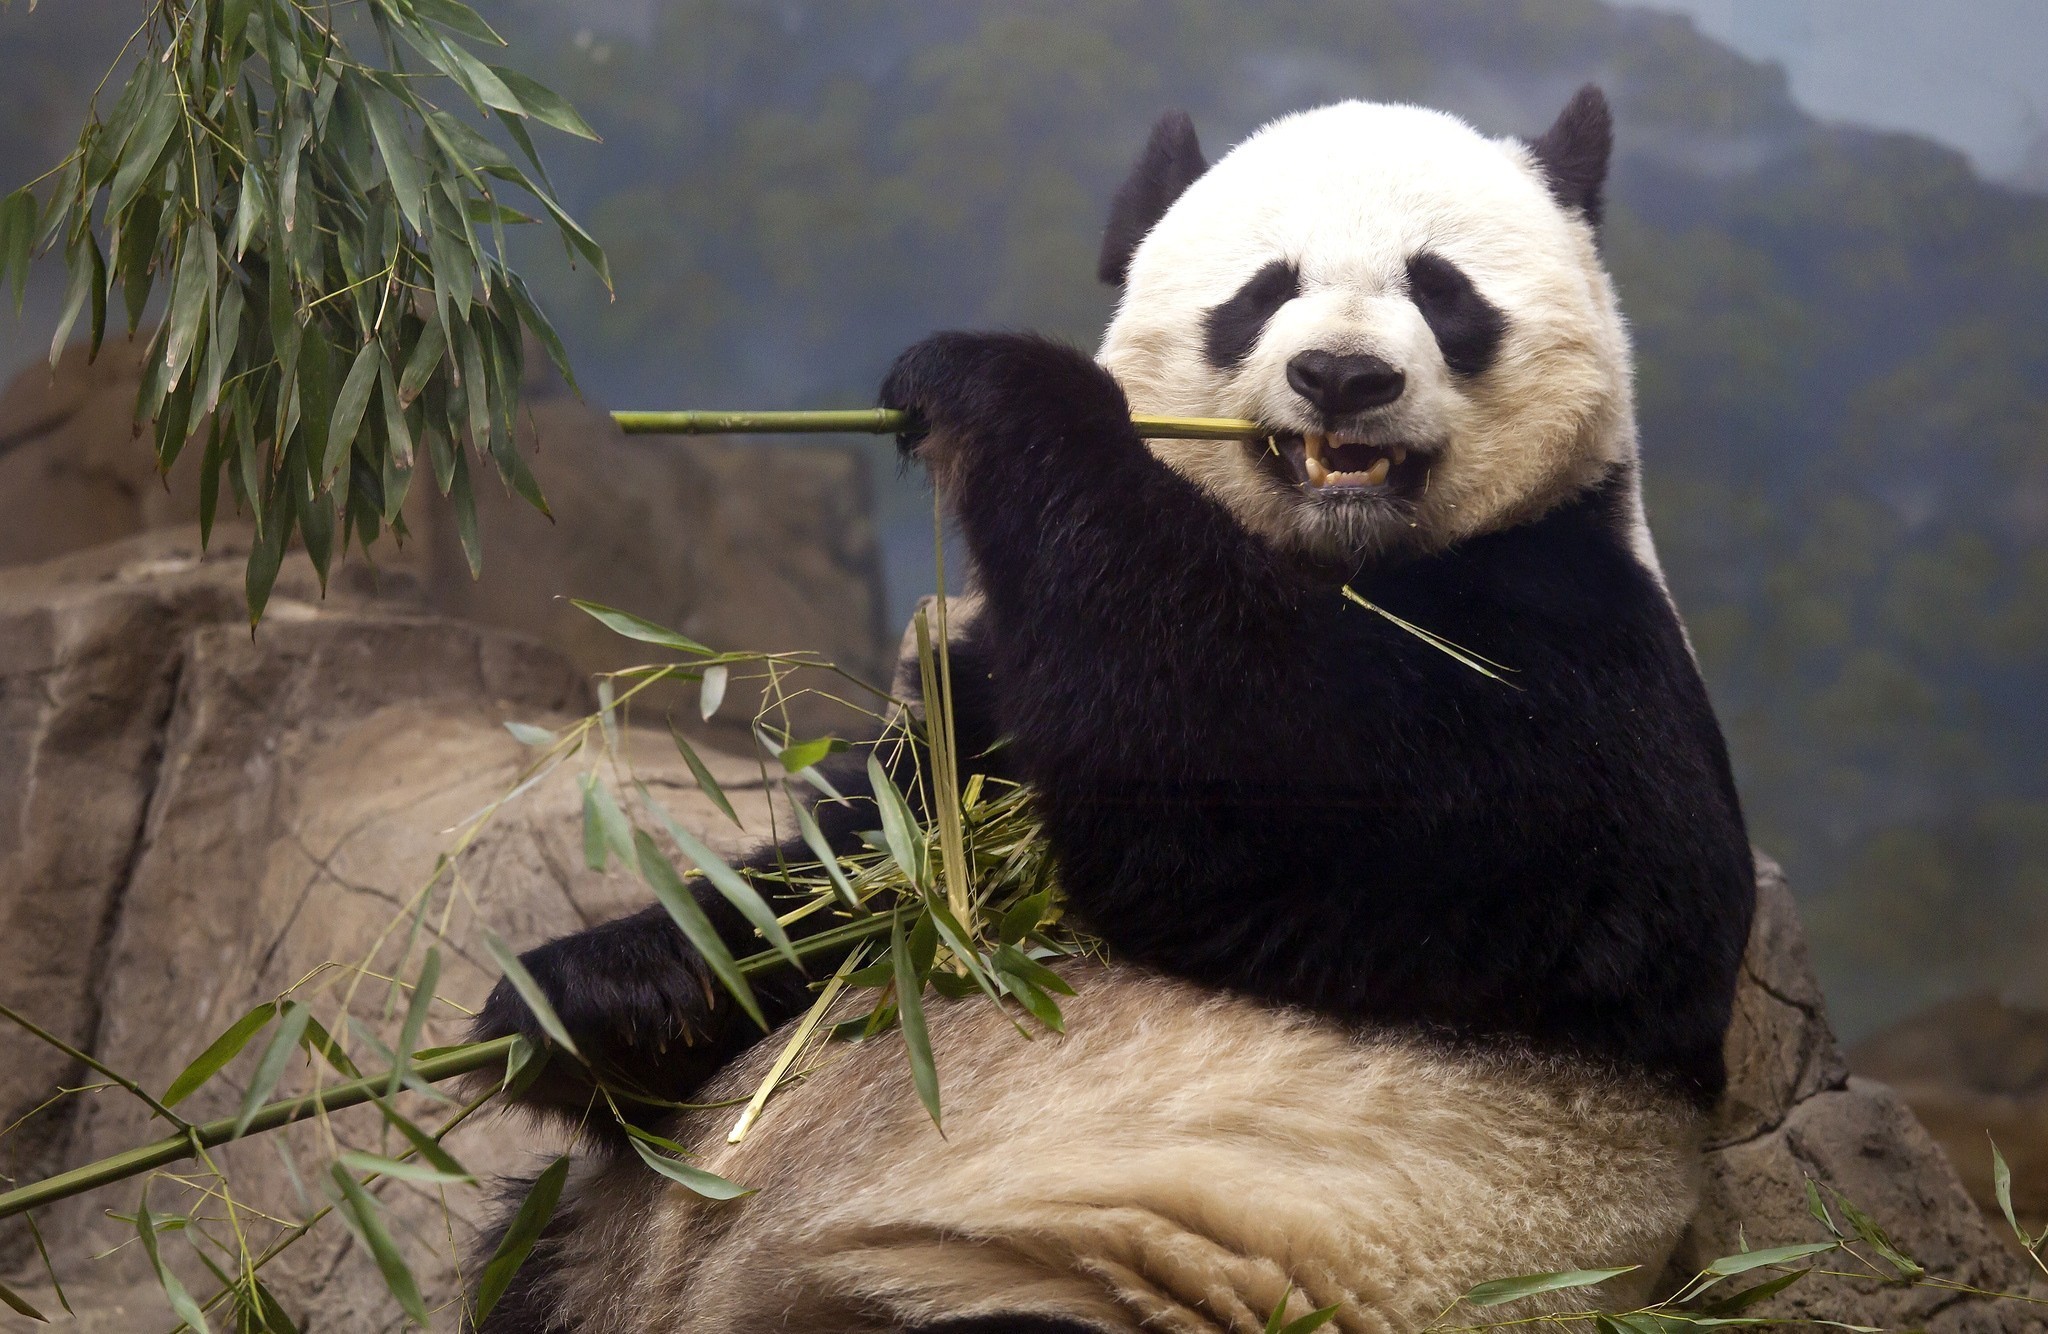  Panda Windows Backgrounds